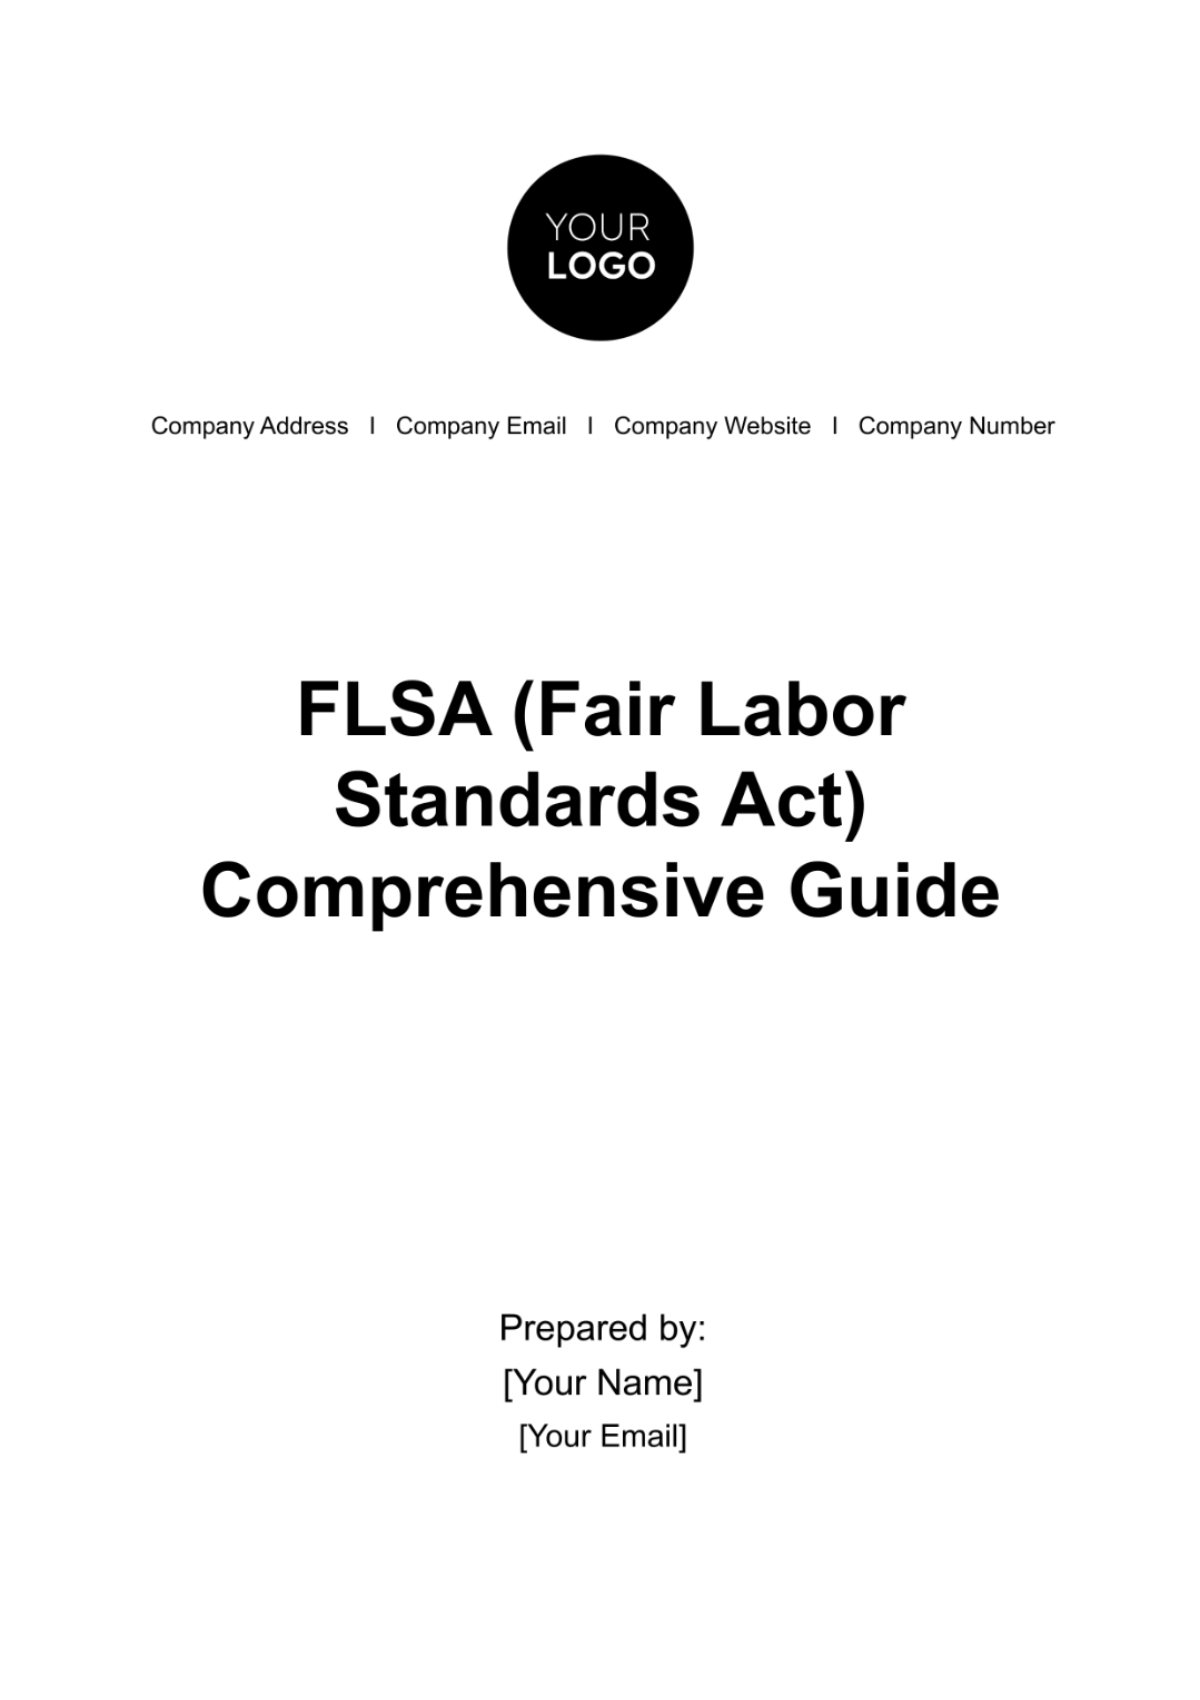 FLSA (Fair Labor Standards Act) Comprehensive Guide HR Template